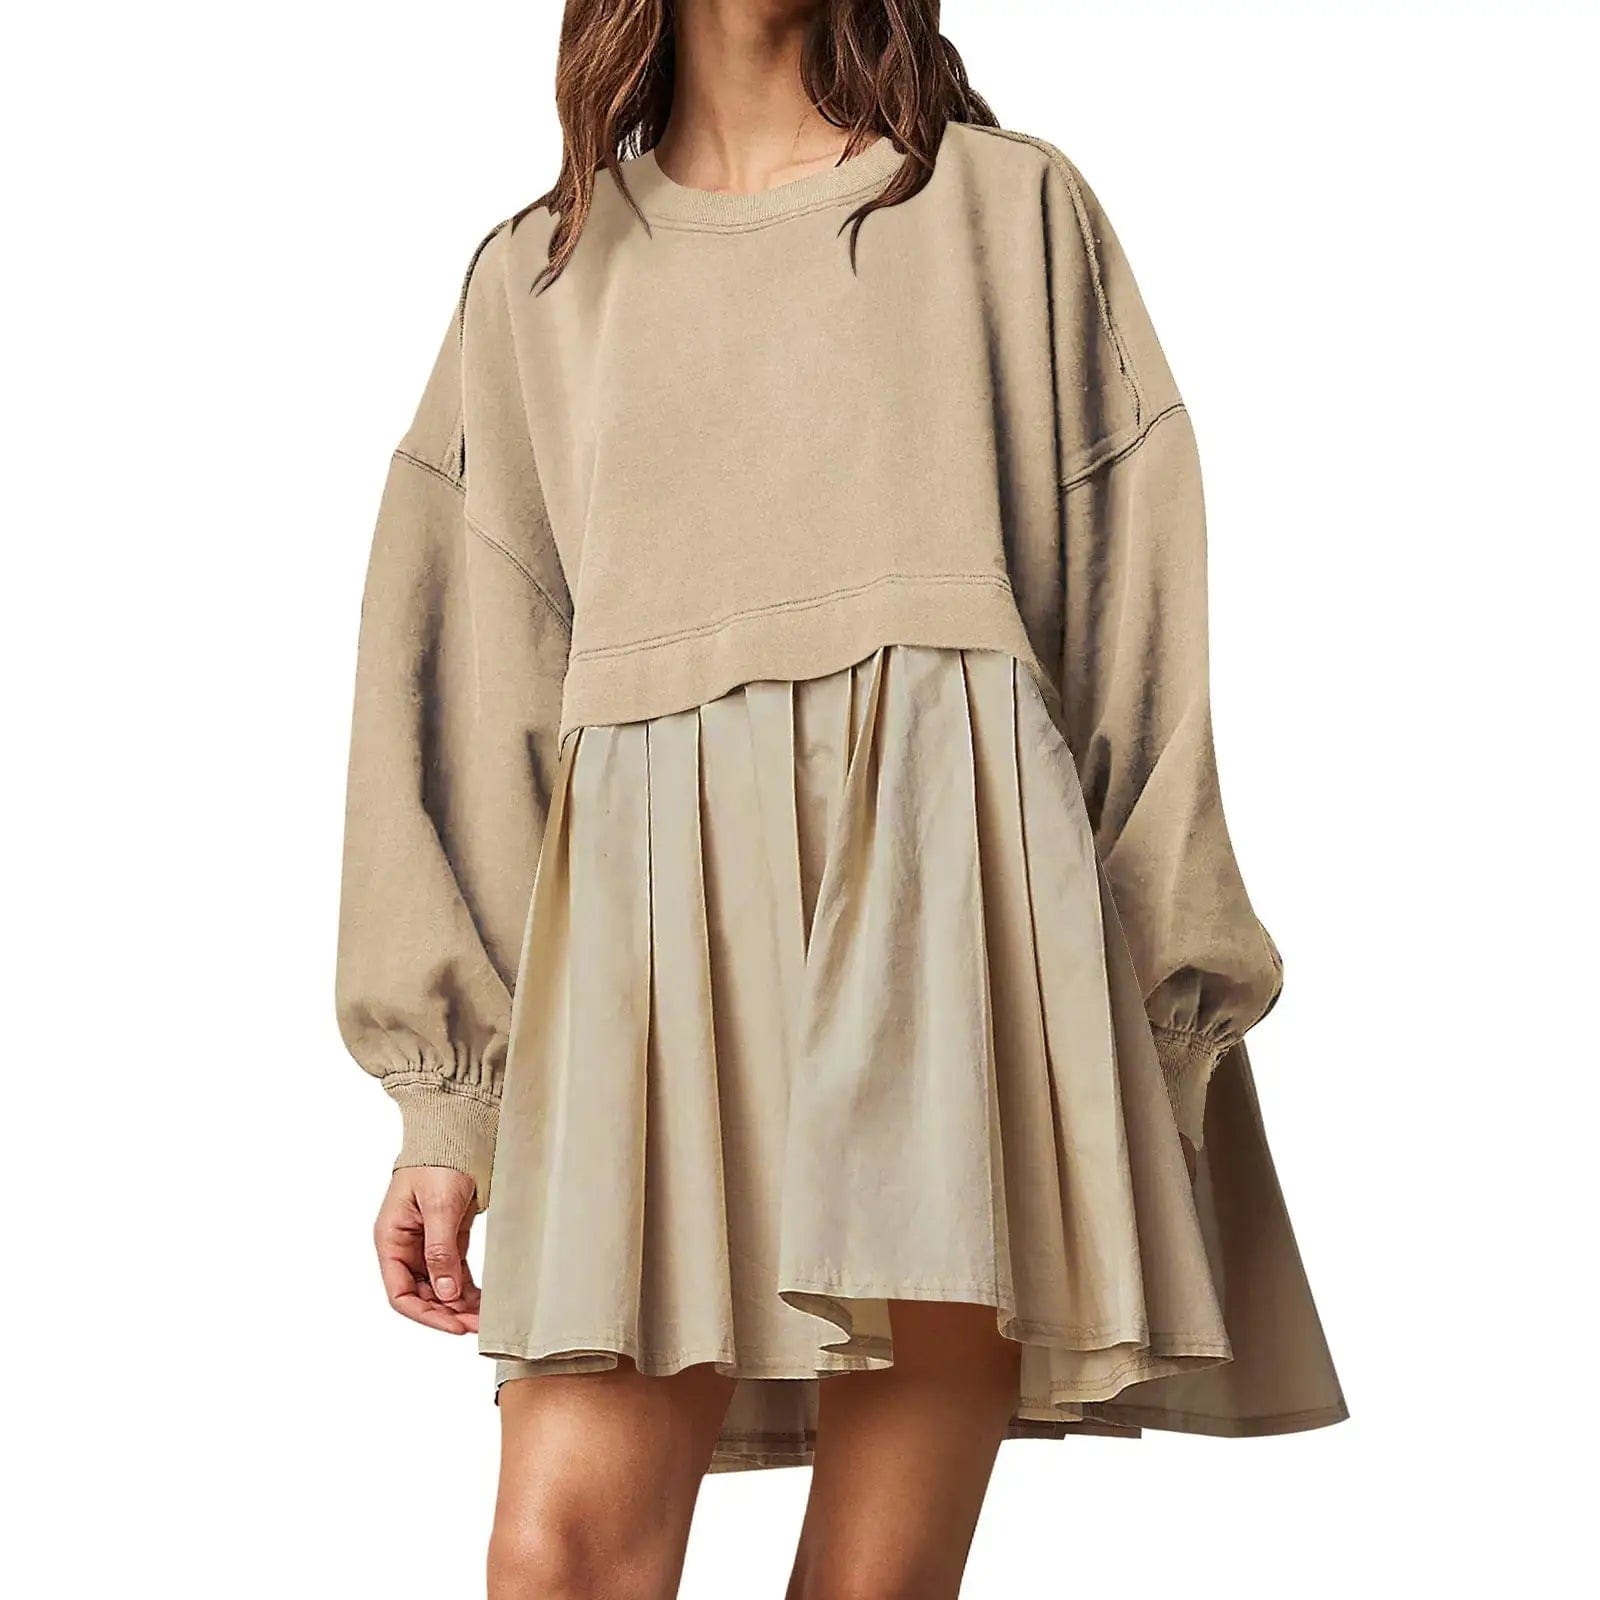 Cheky Khaki / S Womens Sweatshirt Dress Loose Long Sleeve Crewneck Pullover Tops Relaxed Fit Sweatshirts Short Dress